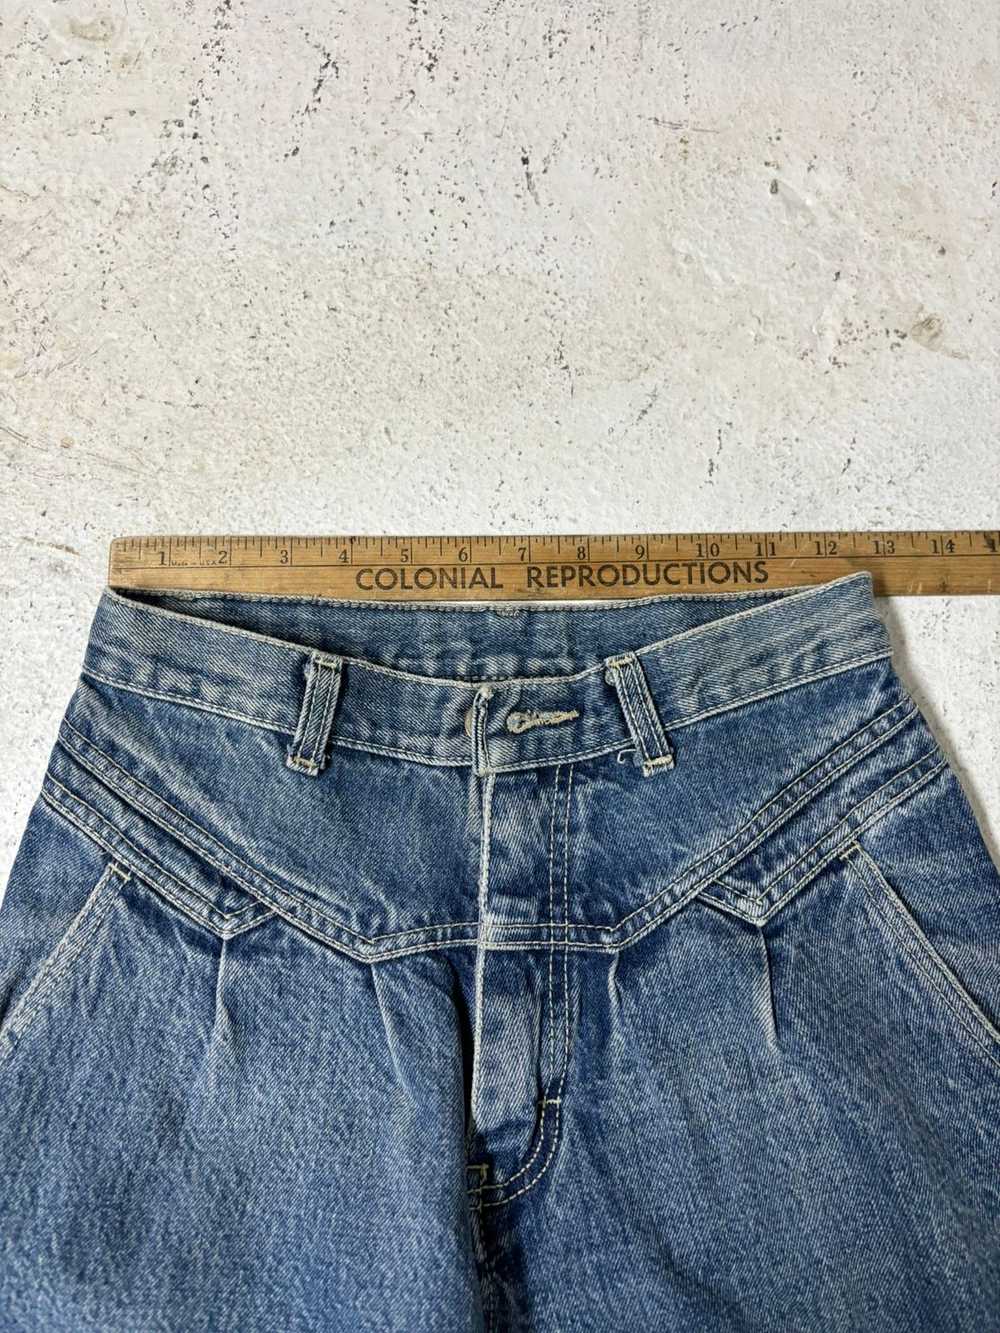 Vintage Vintage 90s gitano jeans - image 5